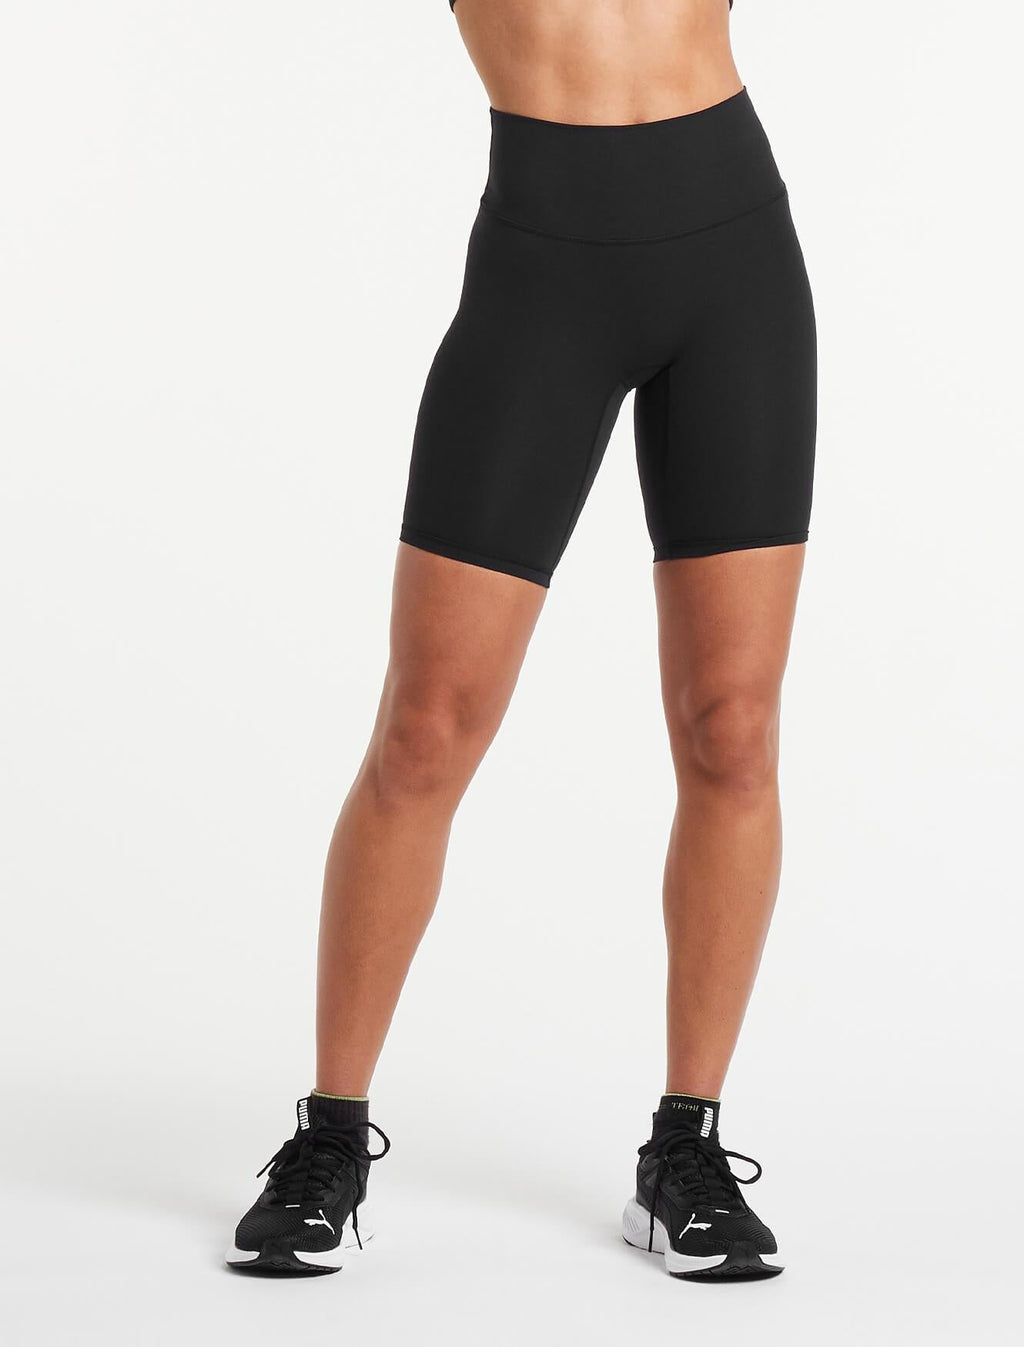 products/womens-pace-biker-shorts-black.jpg